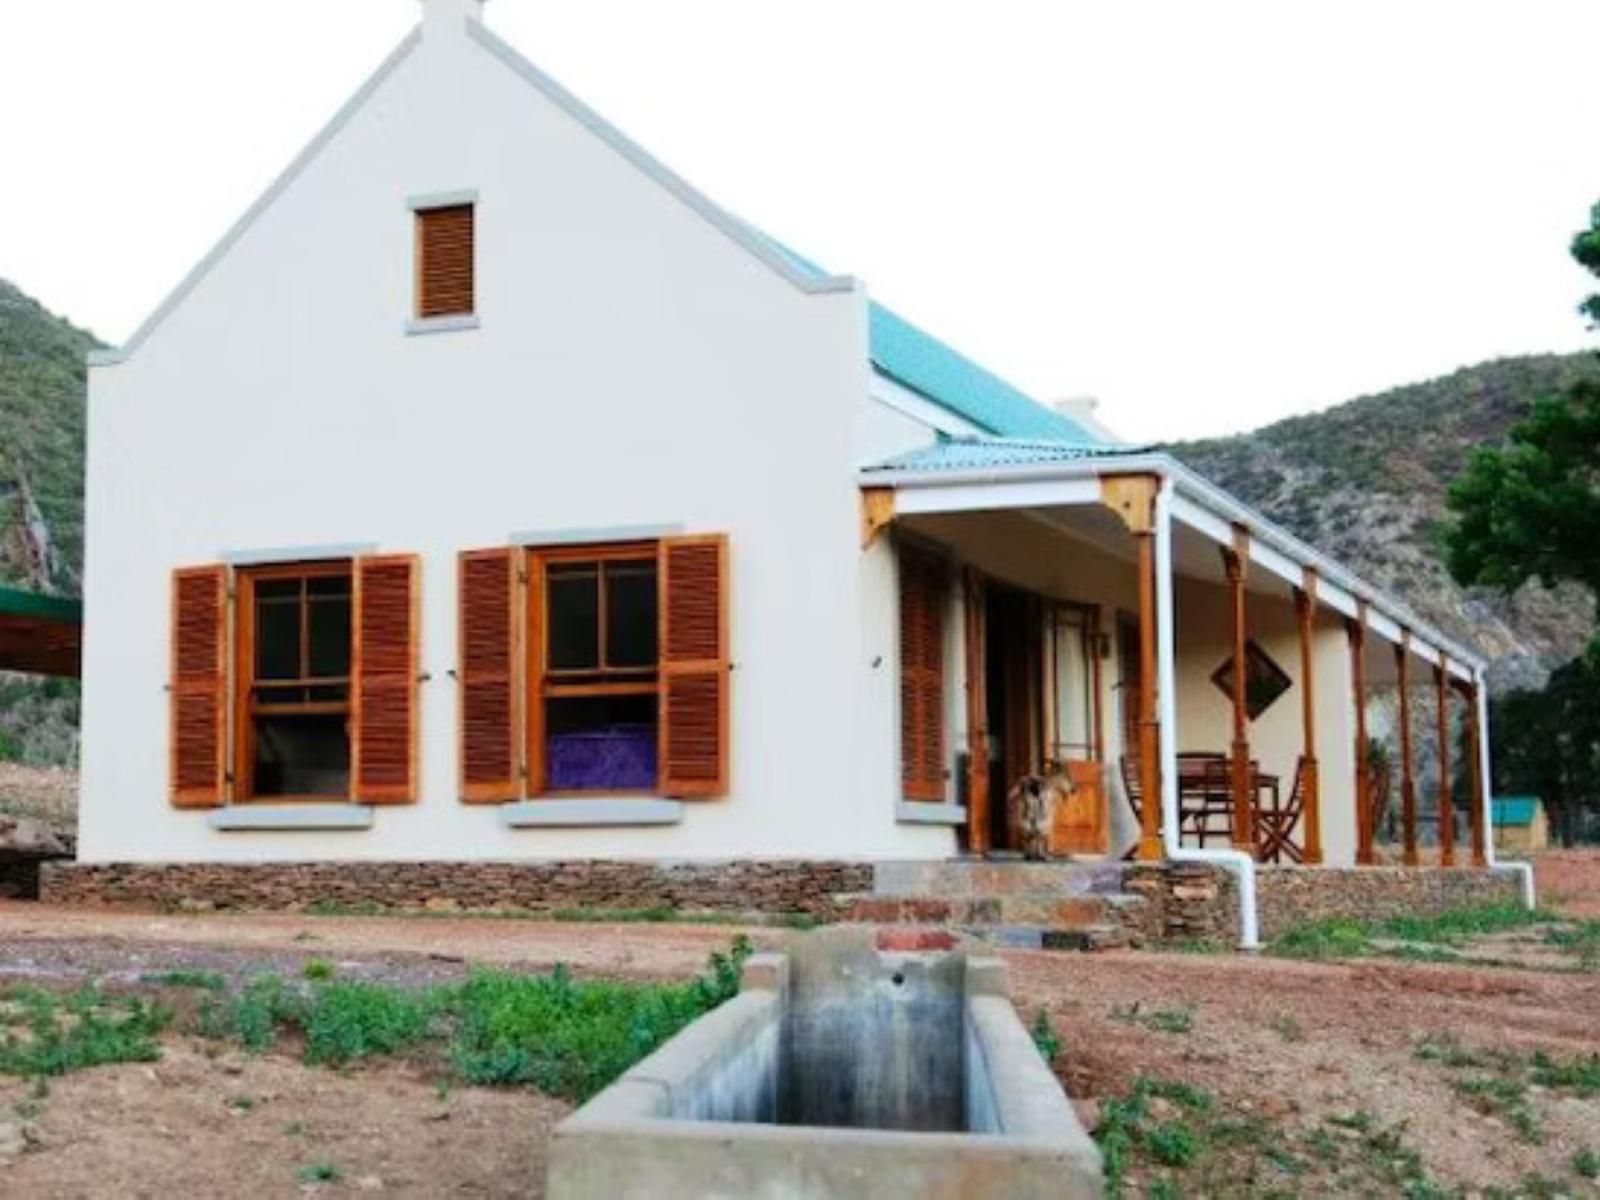 Meijer S Rust Guest Farm De Rust Western Cape South Africa Building, Architecture, House, Window